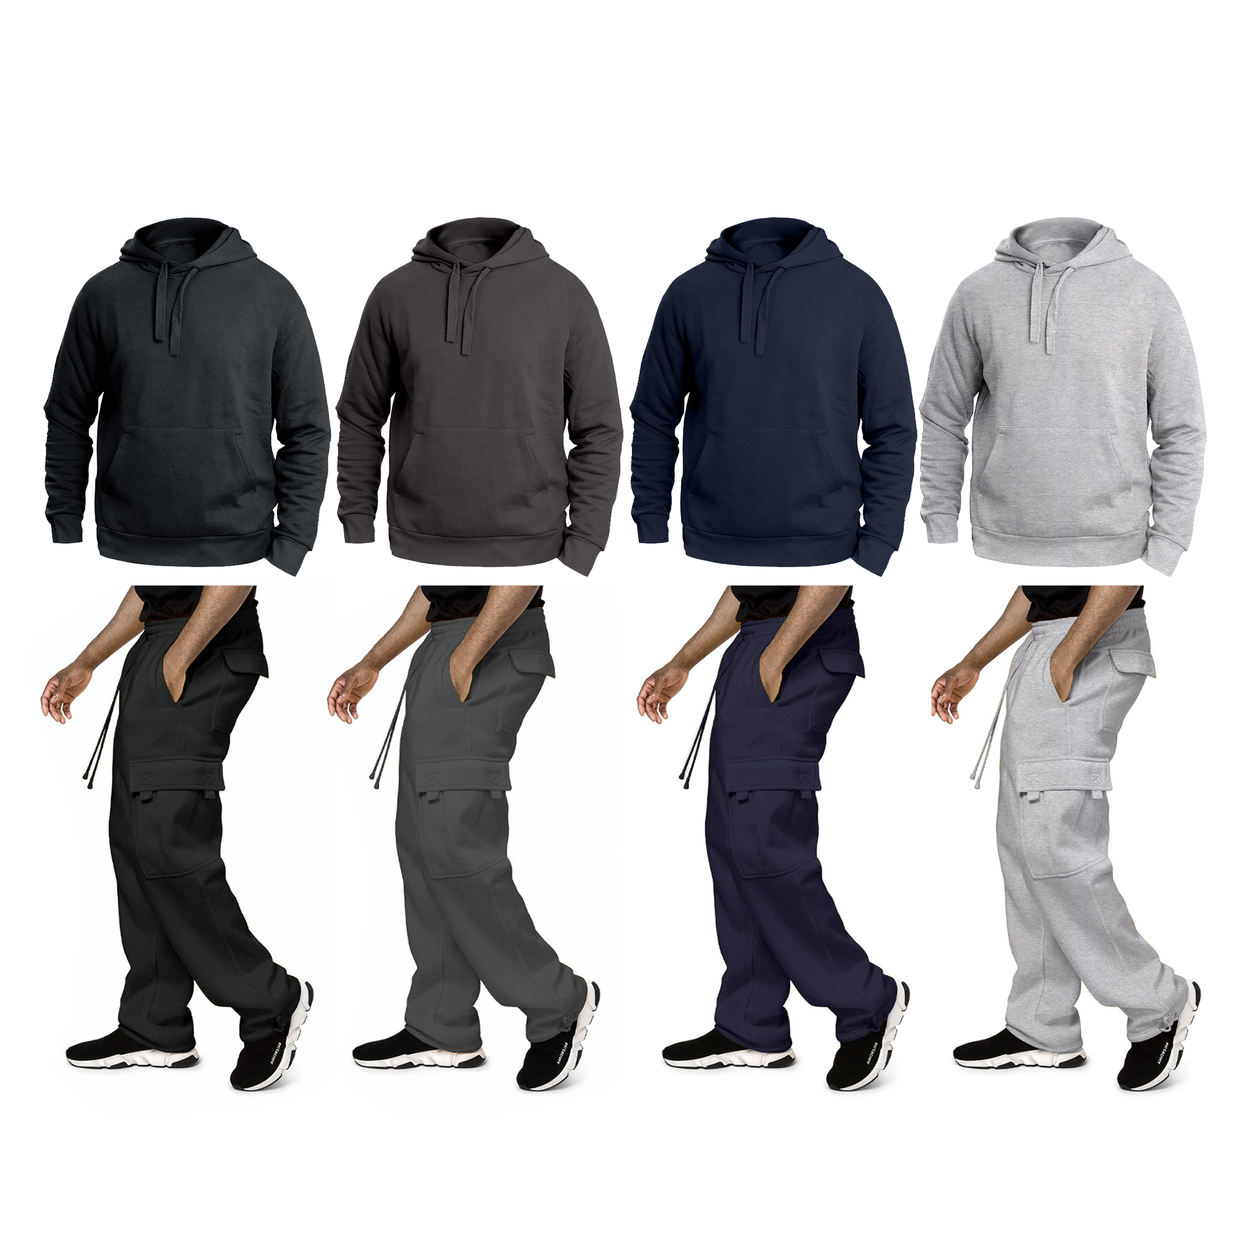 Multi-Pack: Big & Tall Men's Winter Warm Cozy Athletic Fleece Lined Multi-Pocket Cargo Sweatsuit - Black, 1-pack, 3xl